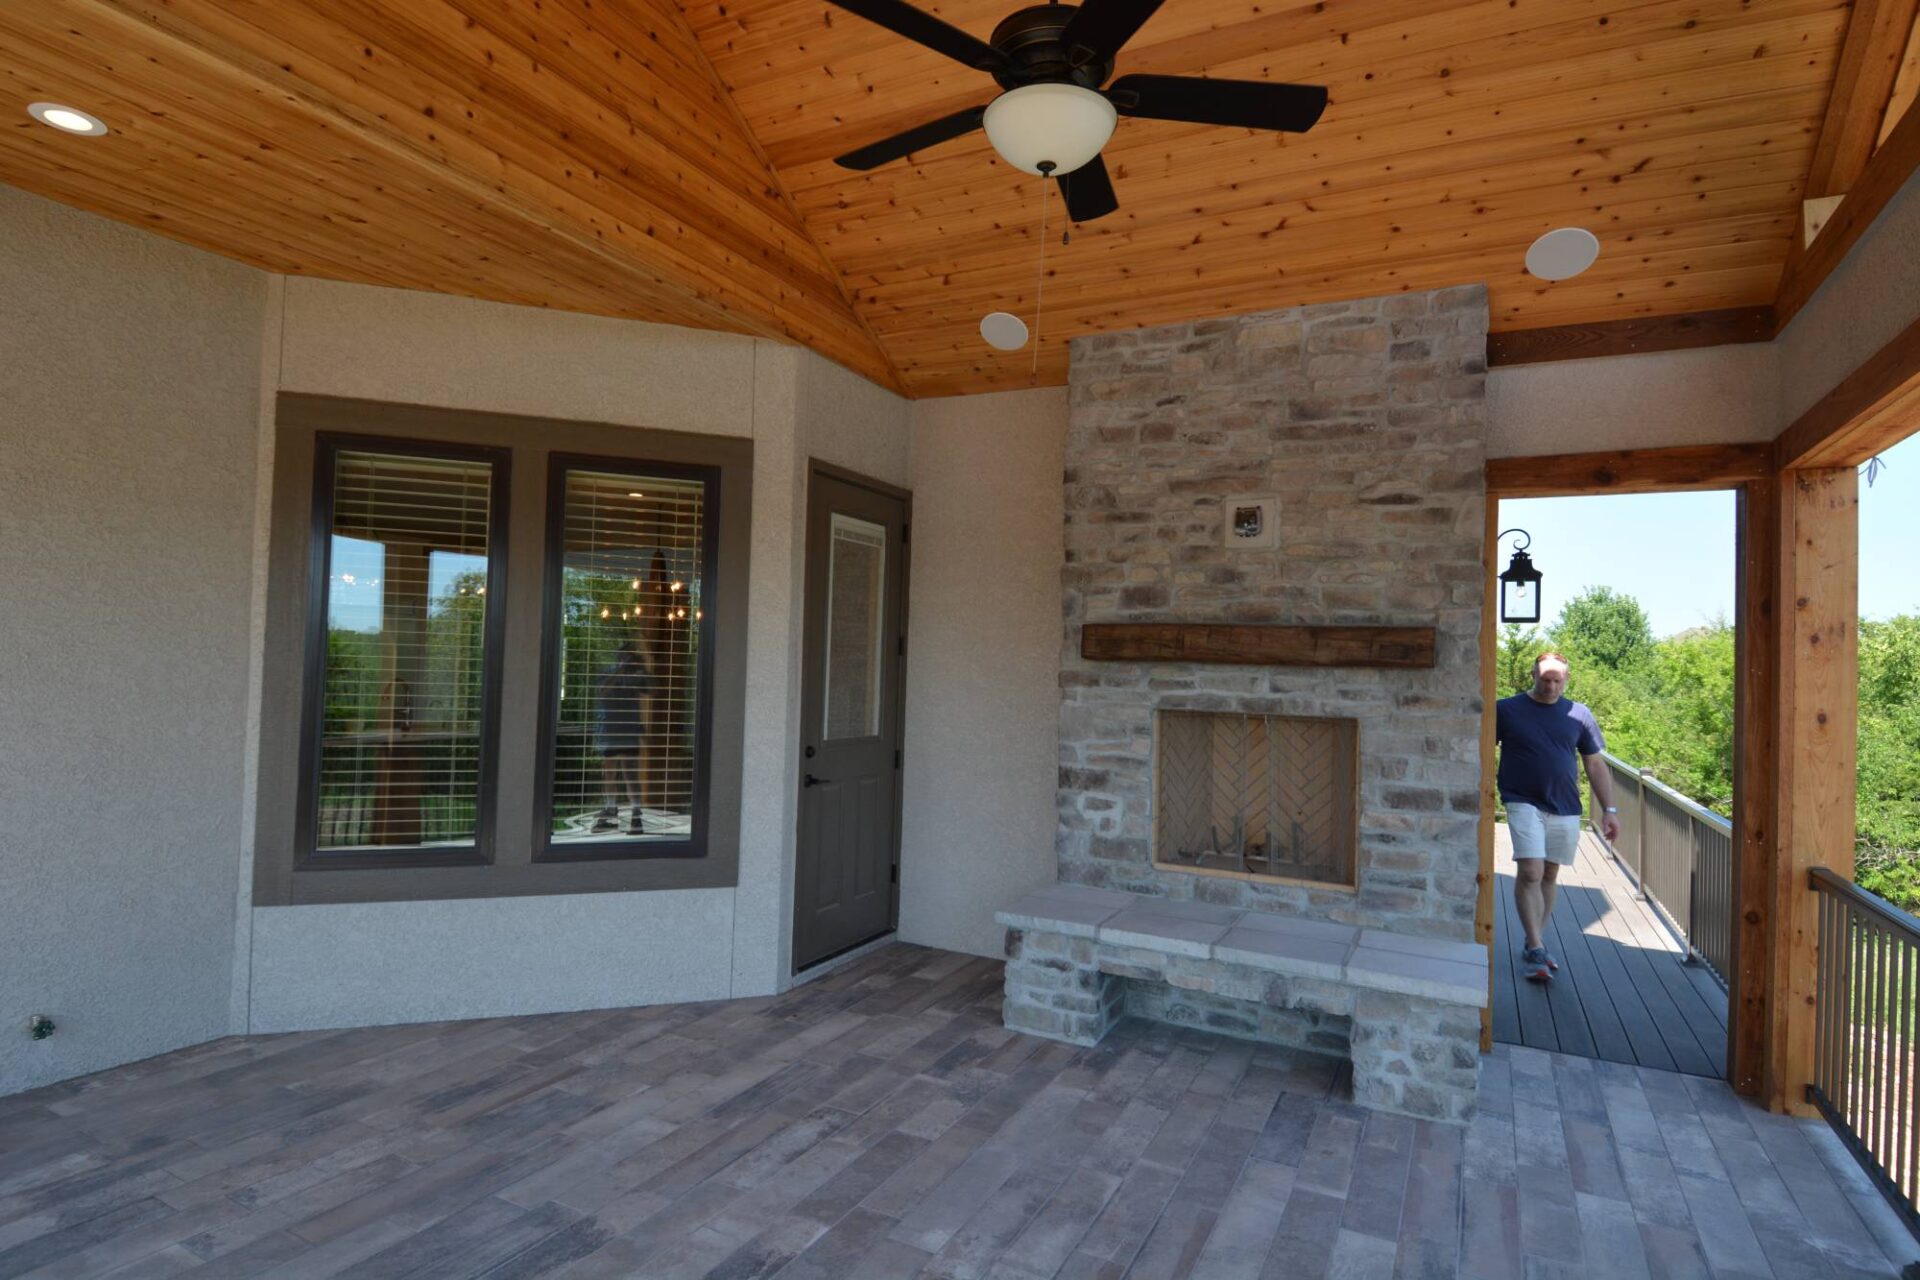 New backyard deck with fireplace